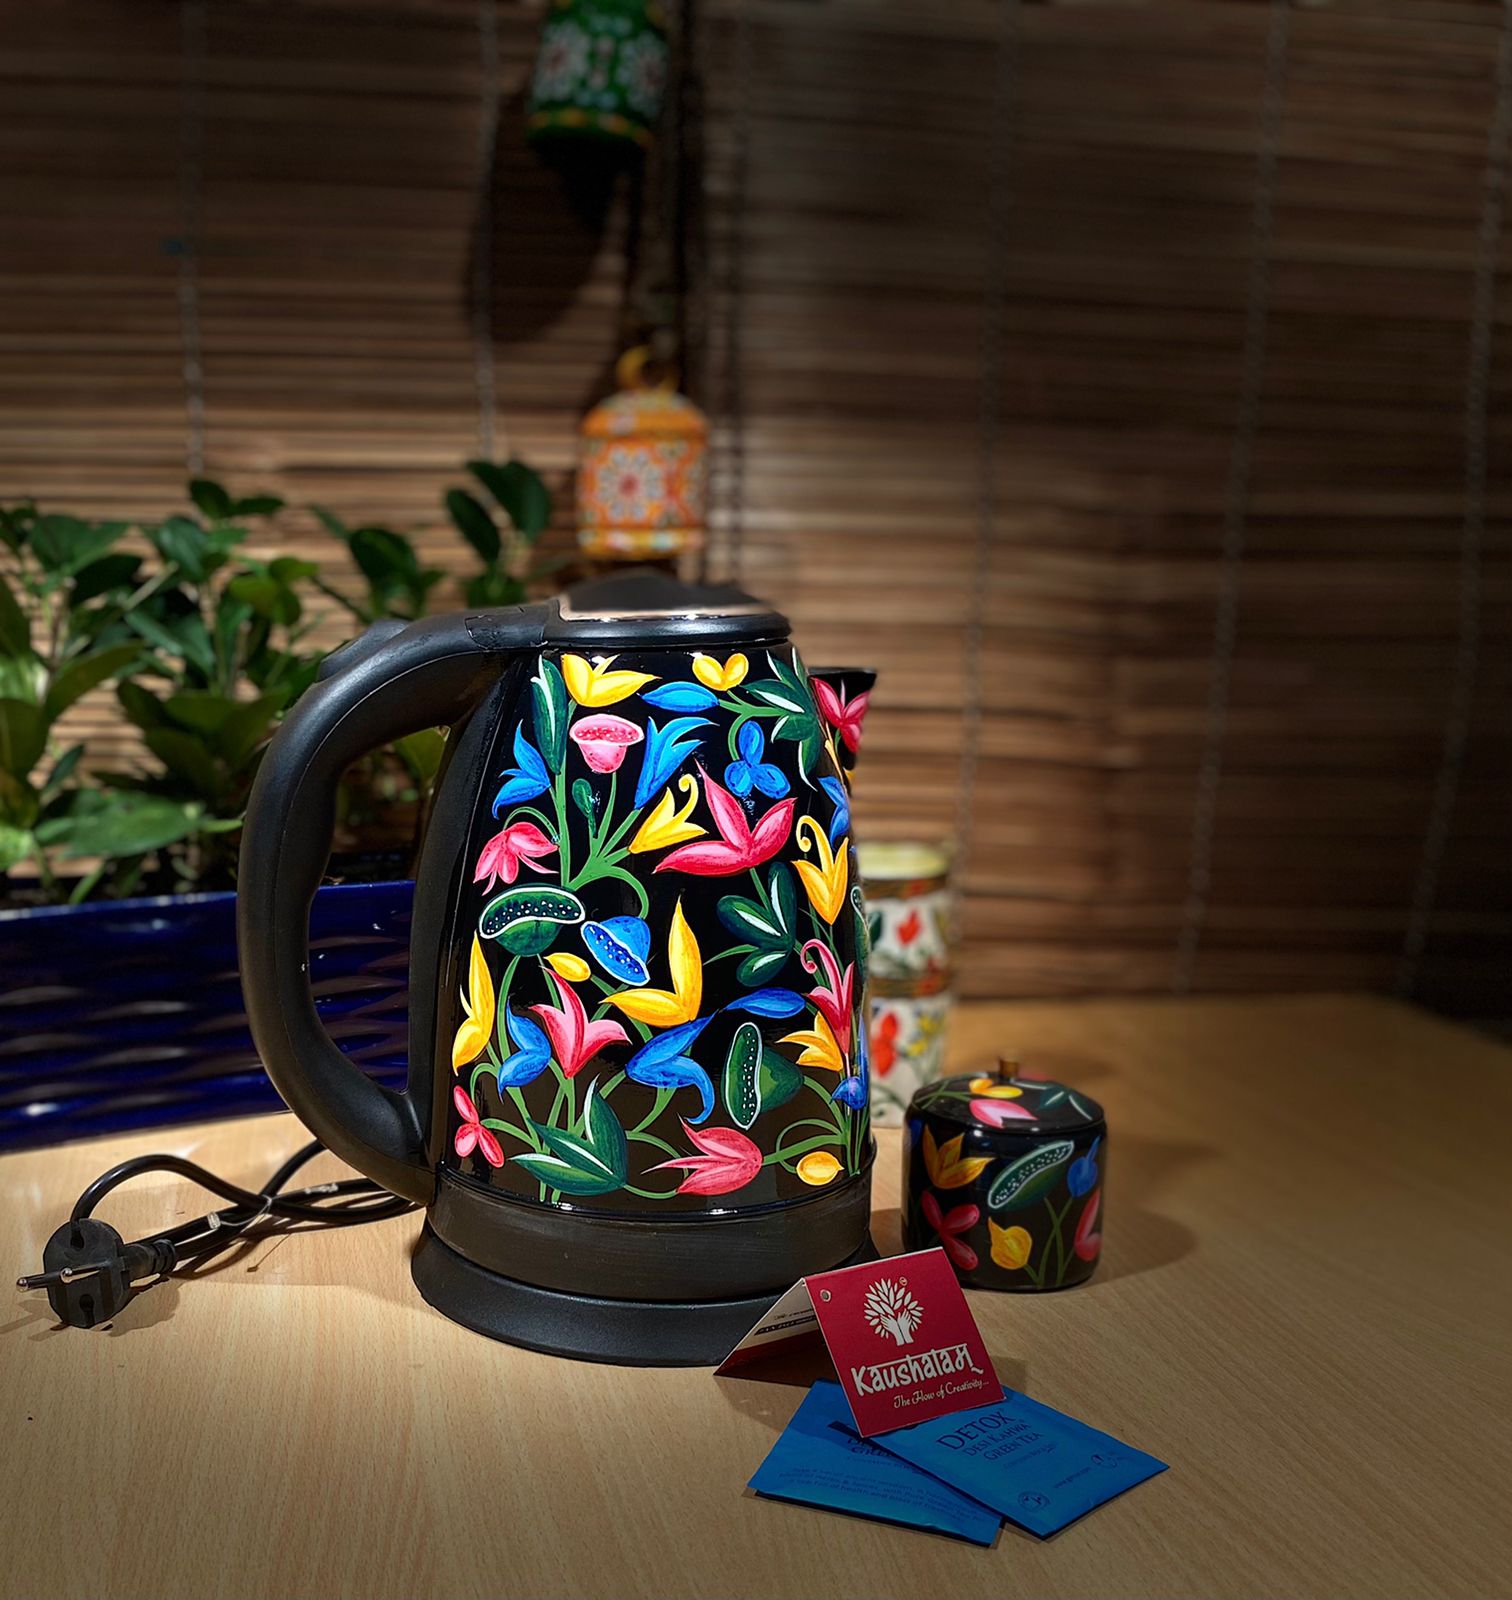  Hand Painted Electric Tea Kettle Hot Water Kettle for Tea & Coffee: Black Kashmiri Art